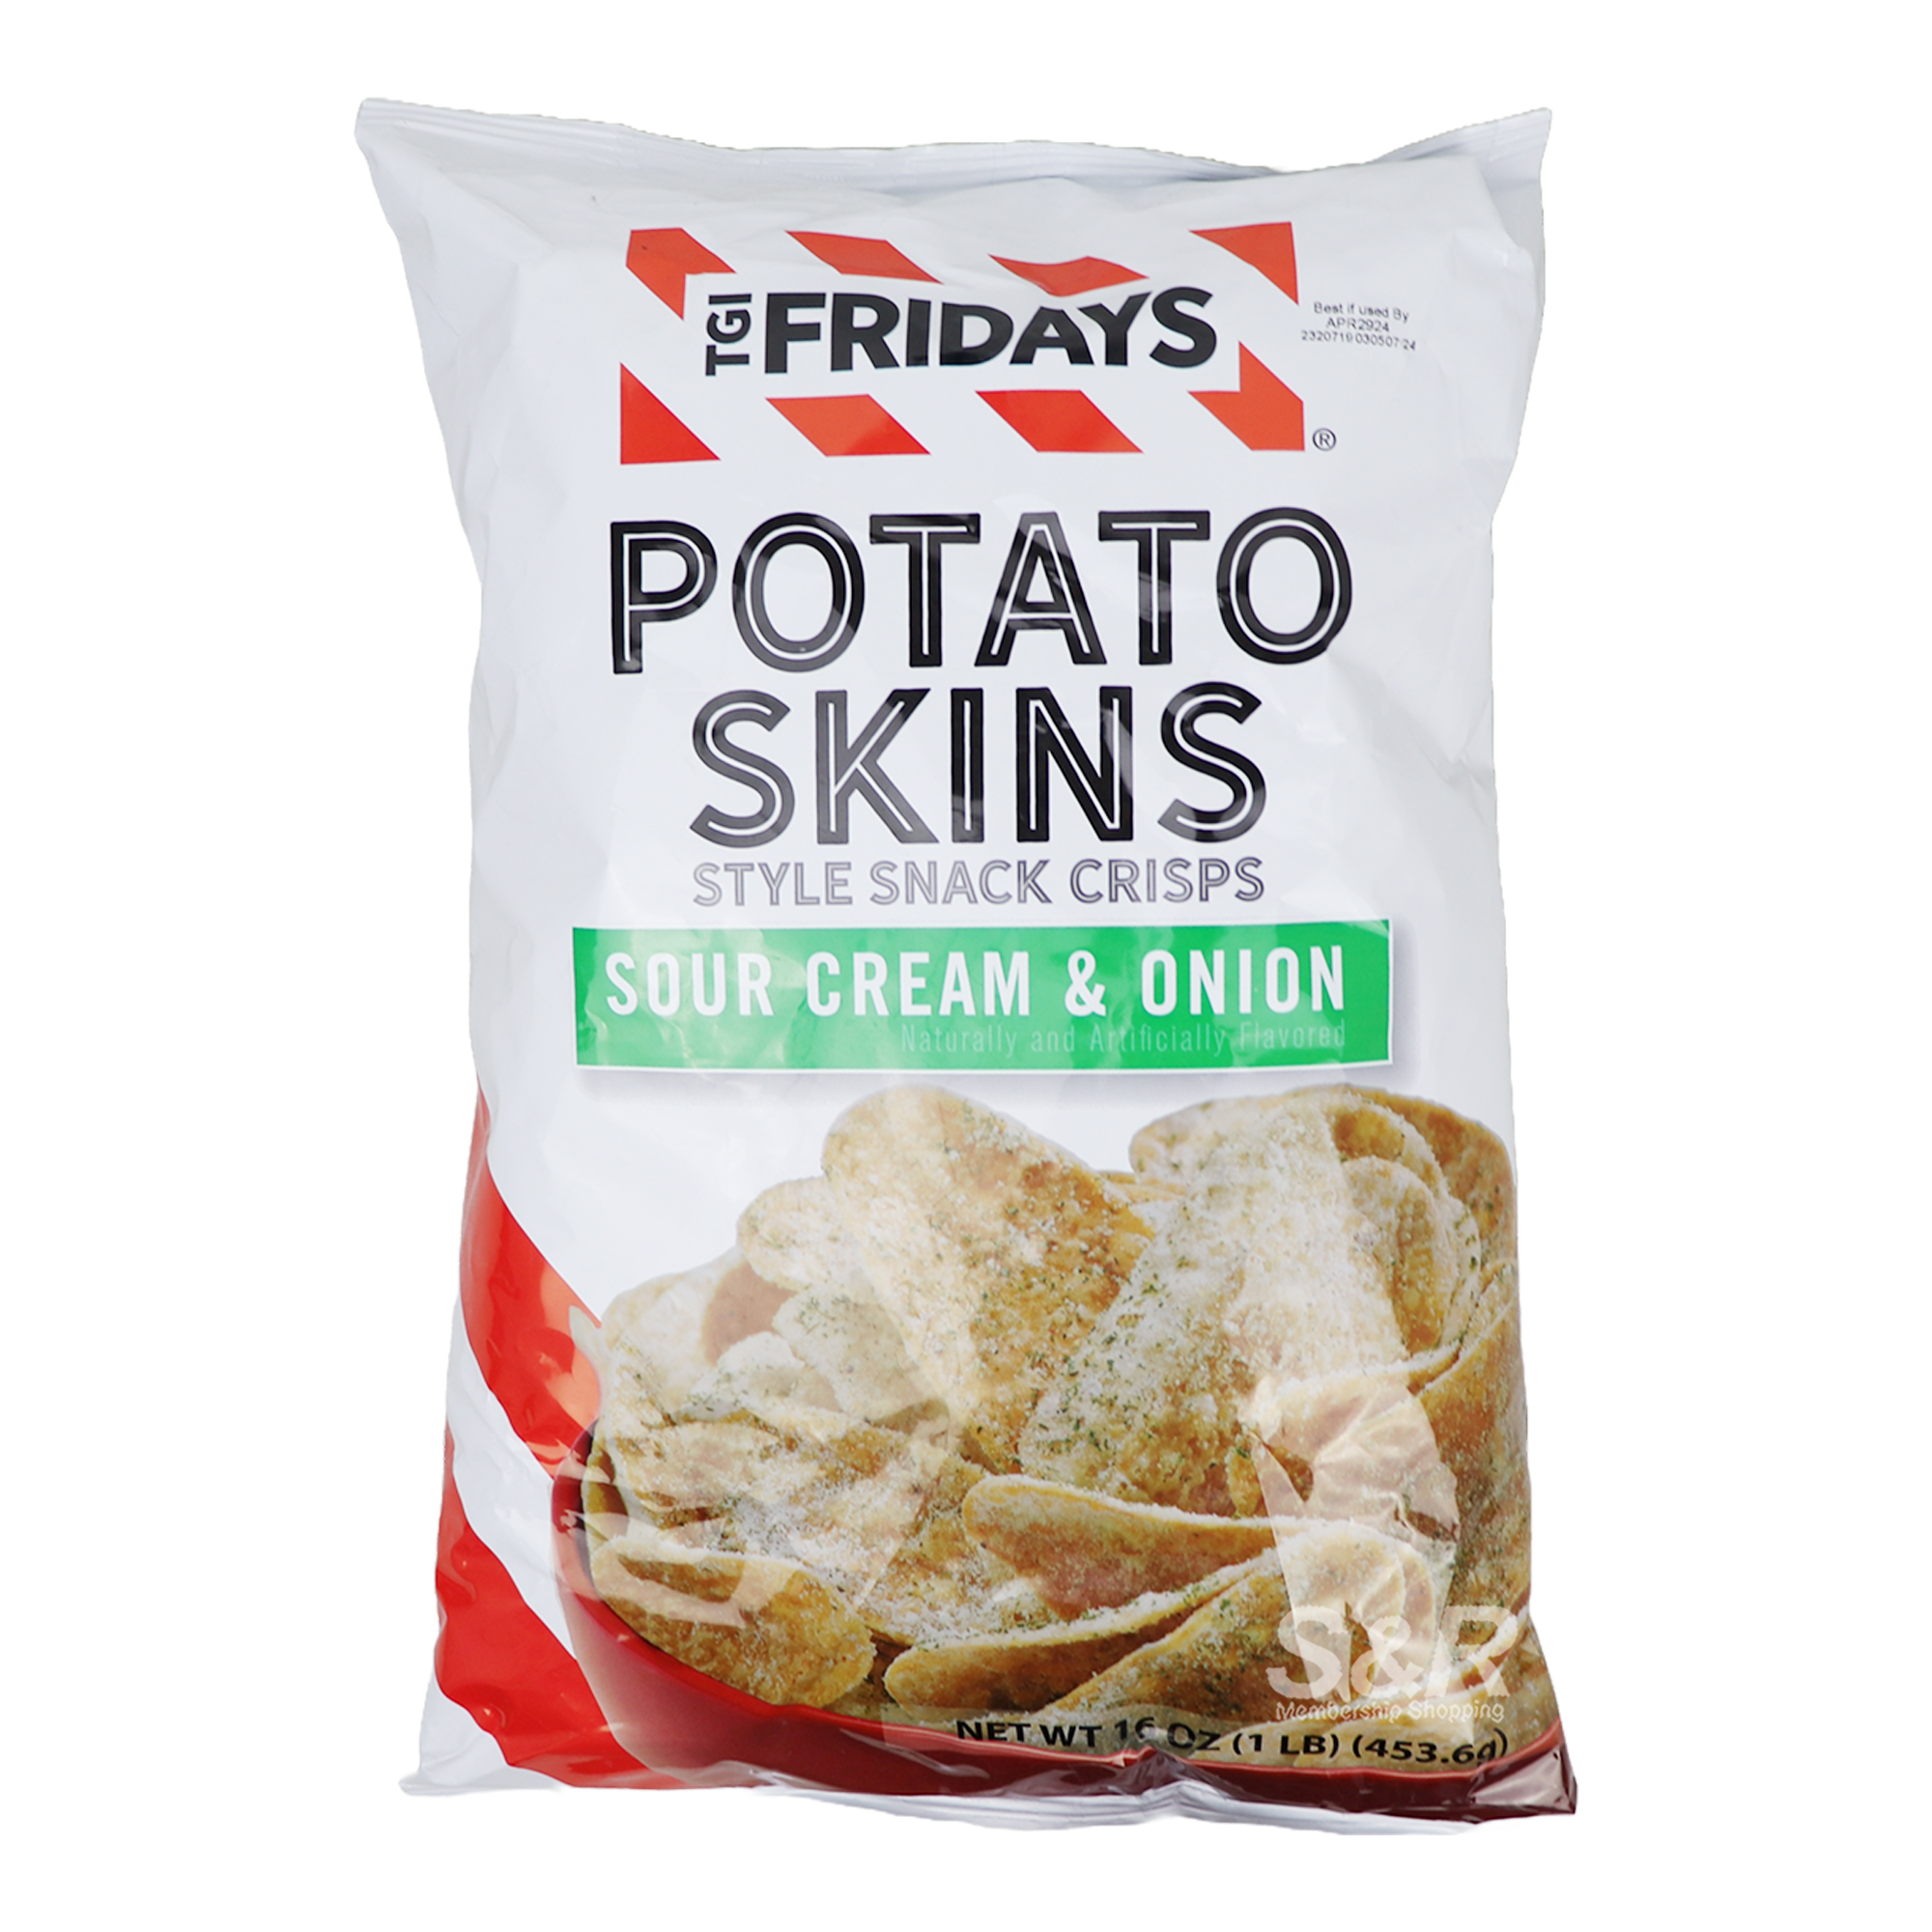 TGI Fridays Potato Skins Sour Cream & Onion 453g